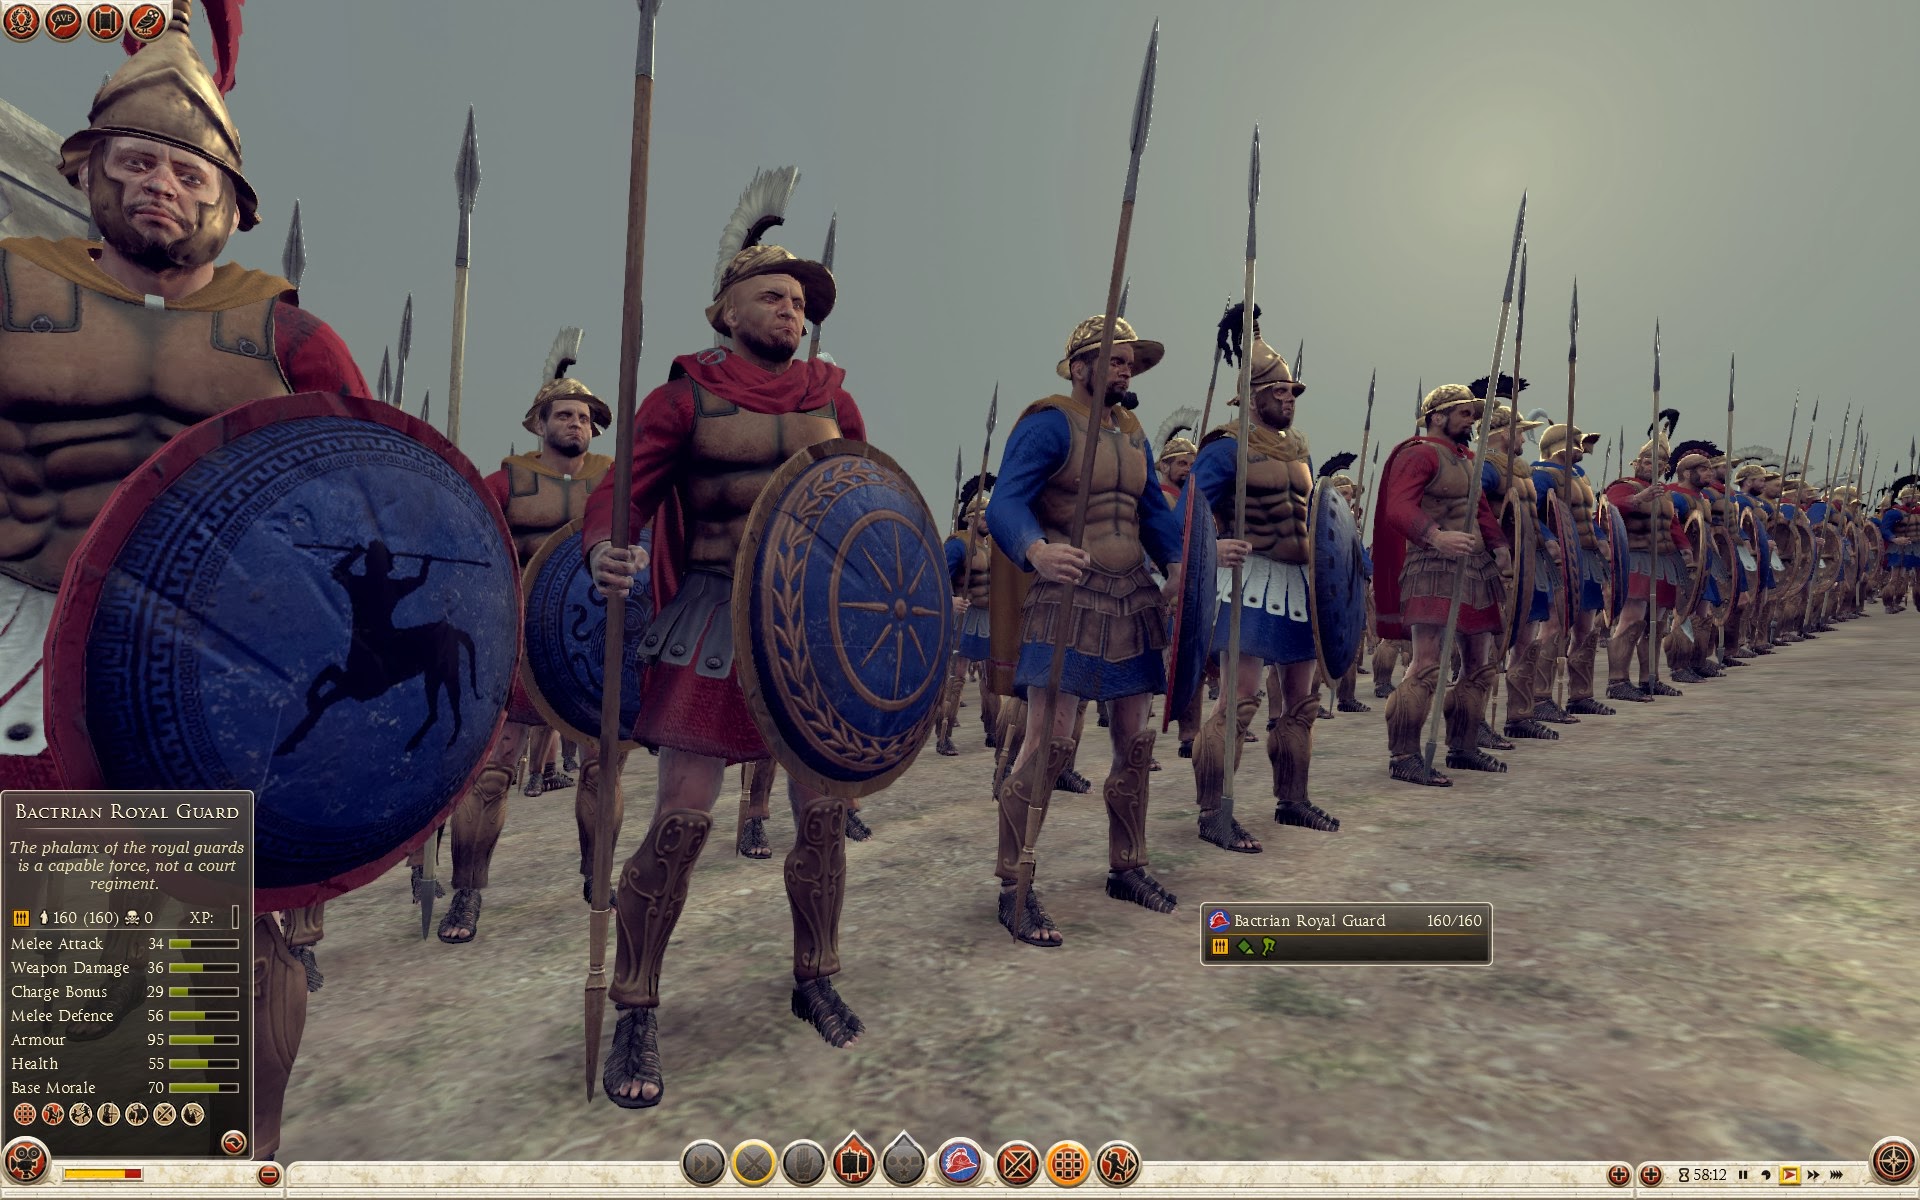 Bactrian Royal Guard